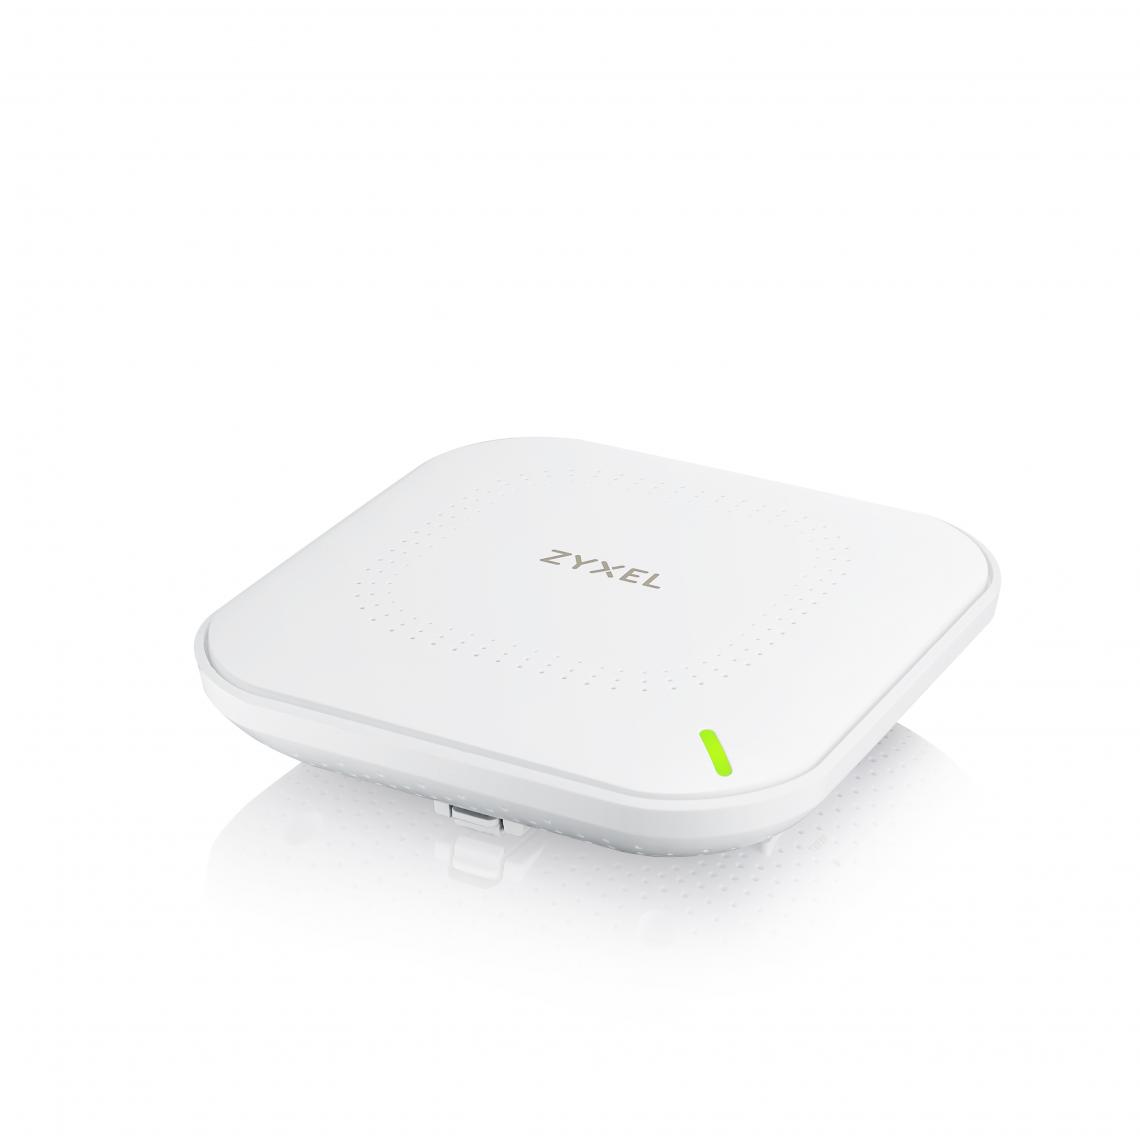 Zyxel - Point d’accès Zyxel véritablement WiFi 6 AX1800 (802.11ax bi-bande), 1,77 Gb/s avec ODFMA et double antenne MU-MIMO 2x2, contrôlable via l’application Nebula, en mode Cloud ou autonome [NWA50AX] - Antenne WiFi